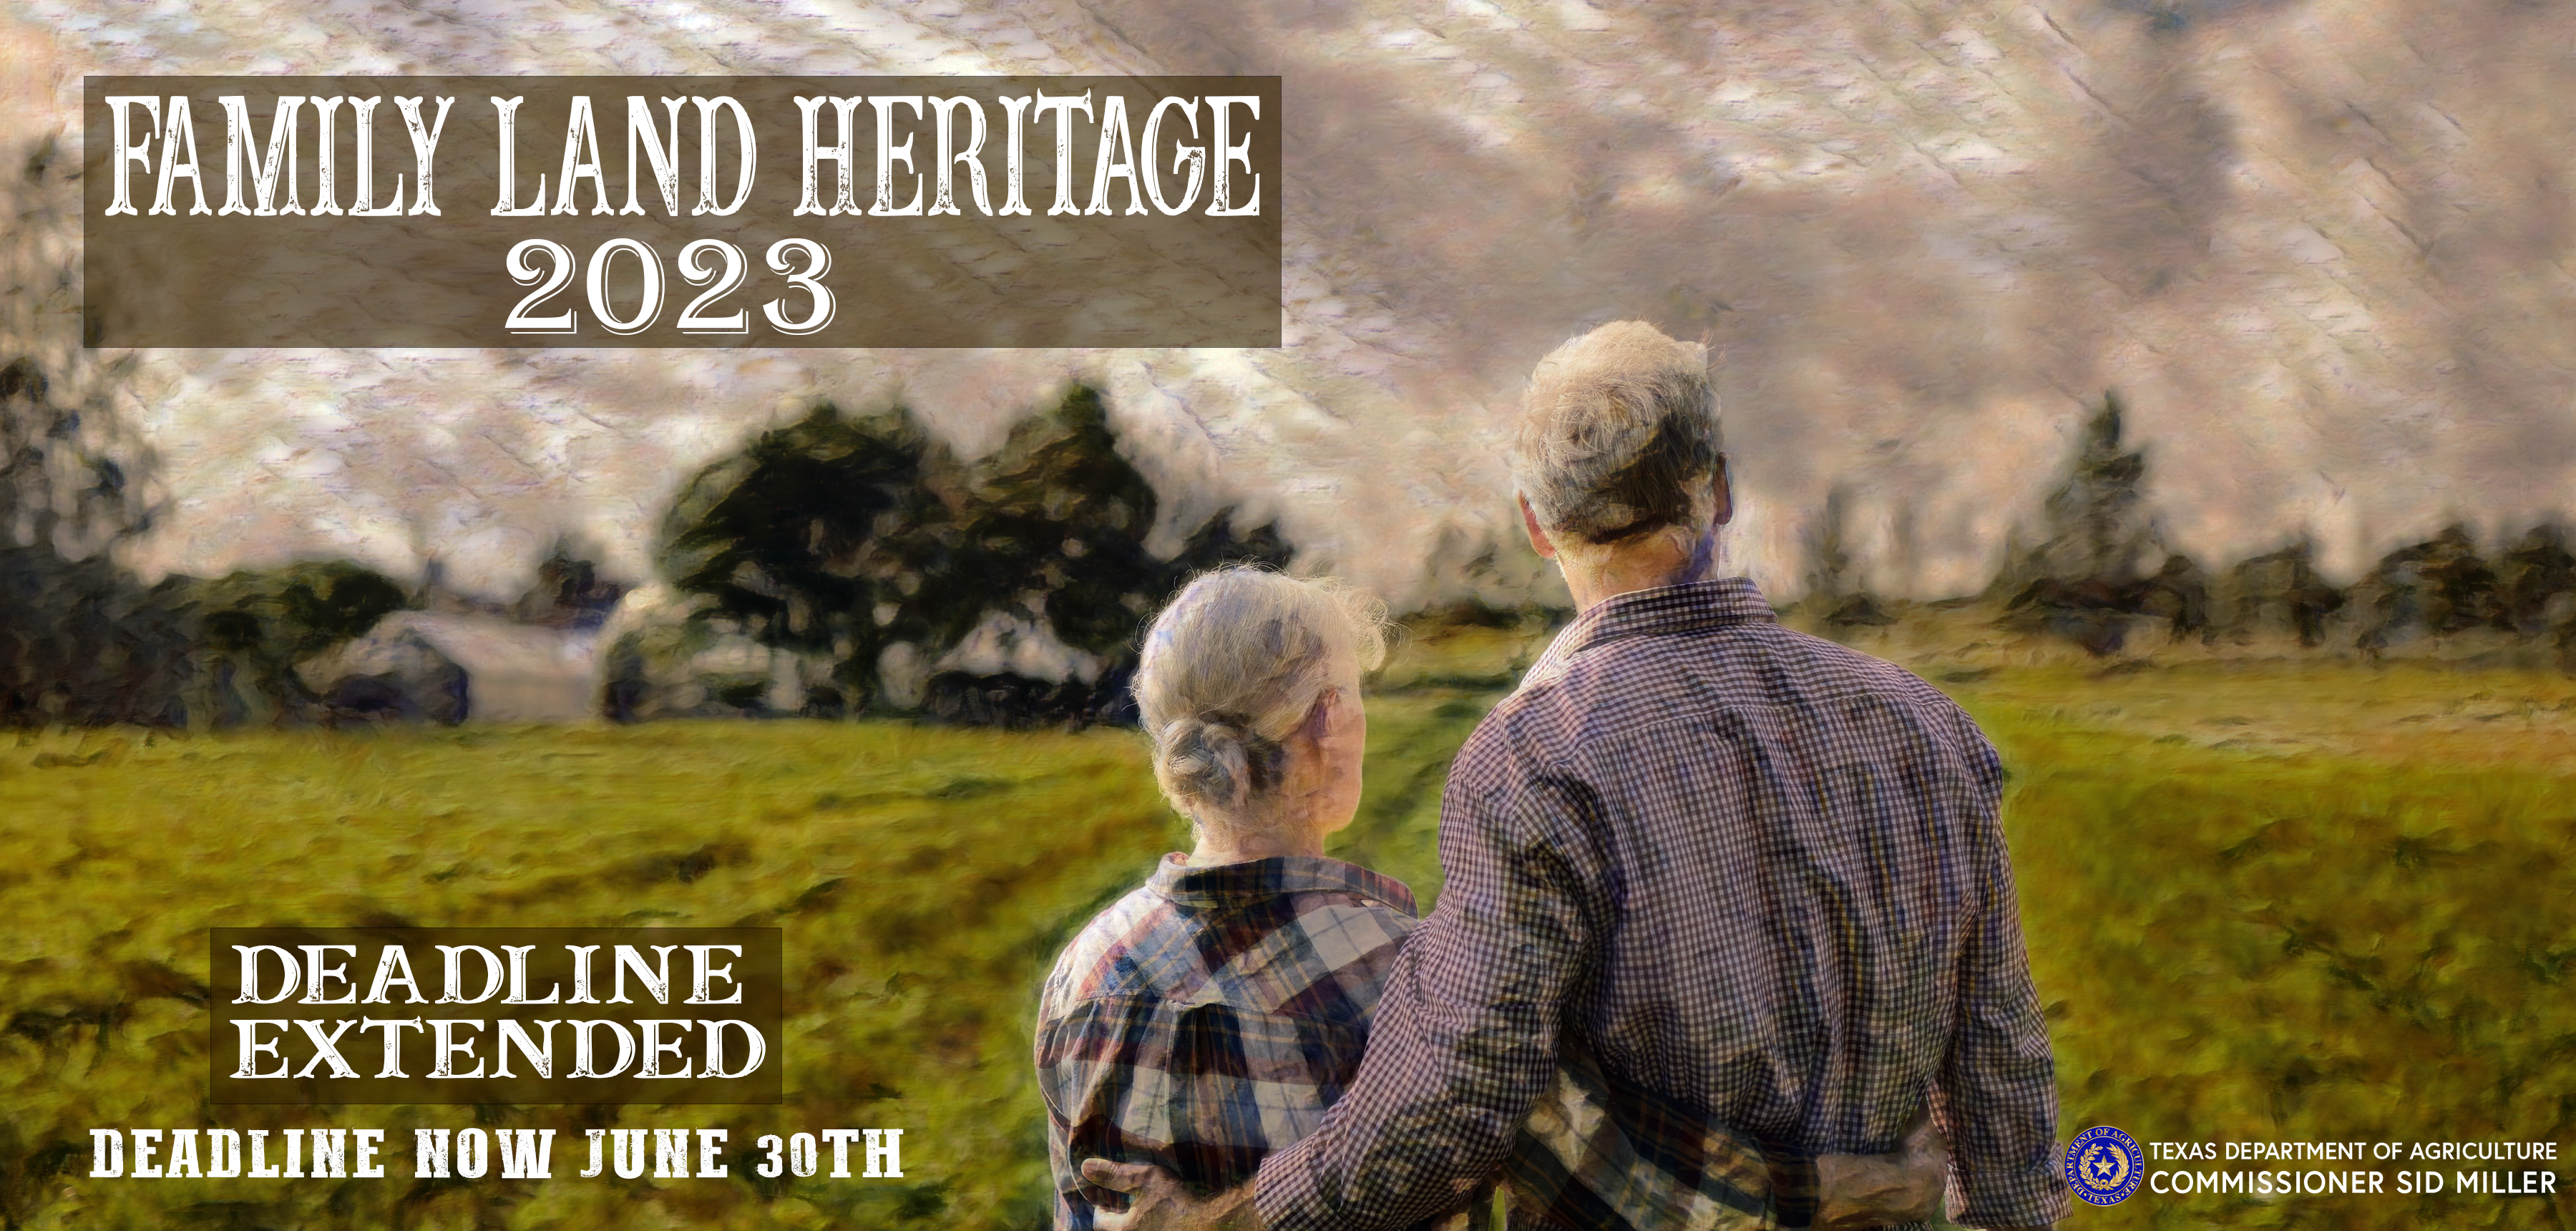 Family Land Heritage Deadline Extended to June 30